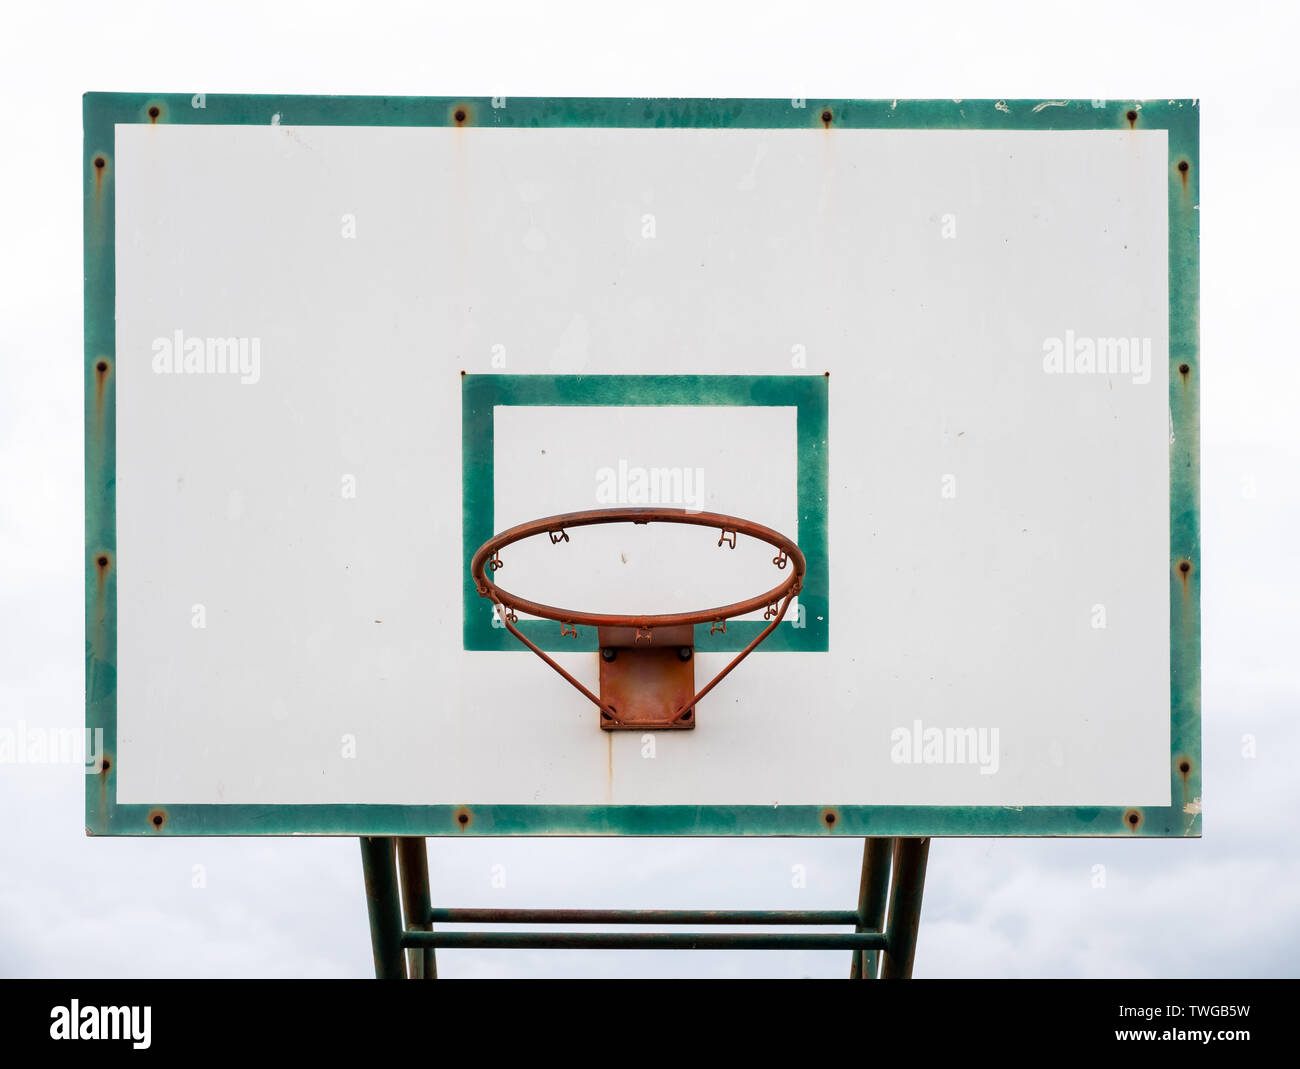 Holz Basketball Backboard mit Hoop grünen Rahmen und alten verwitterten Stockfoto